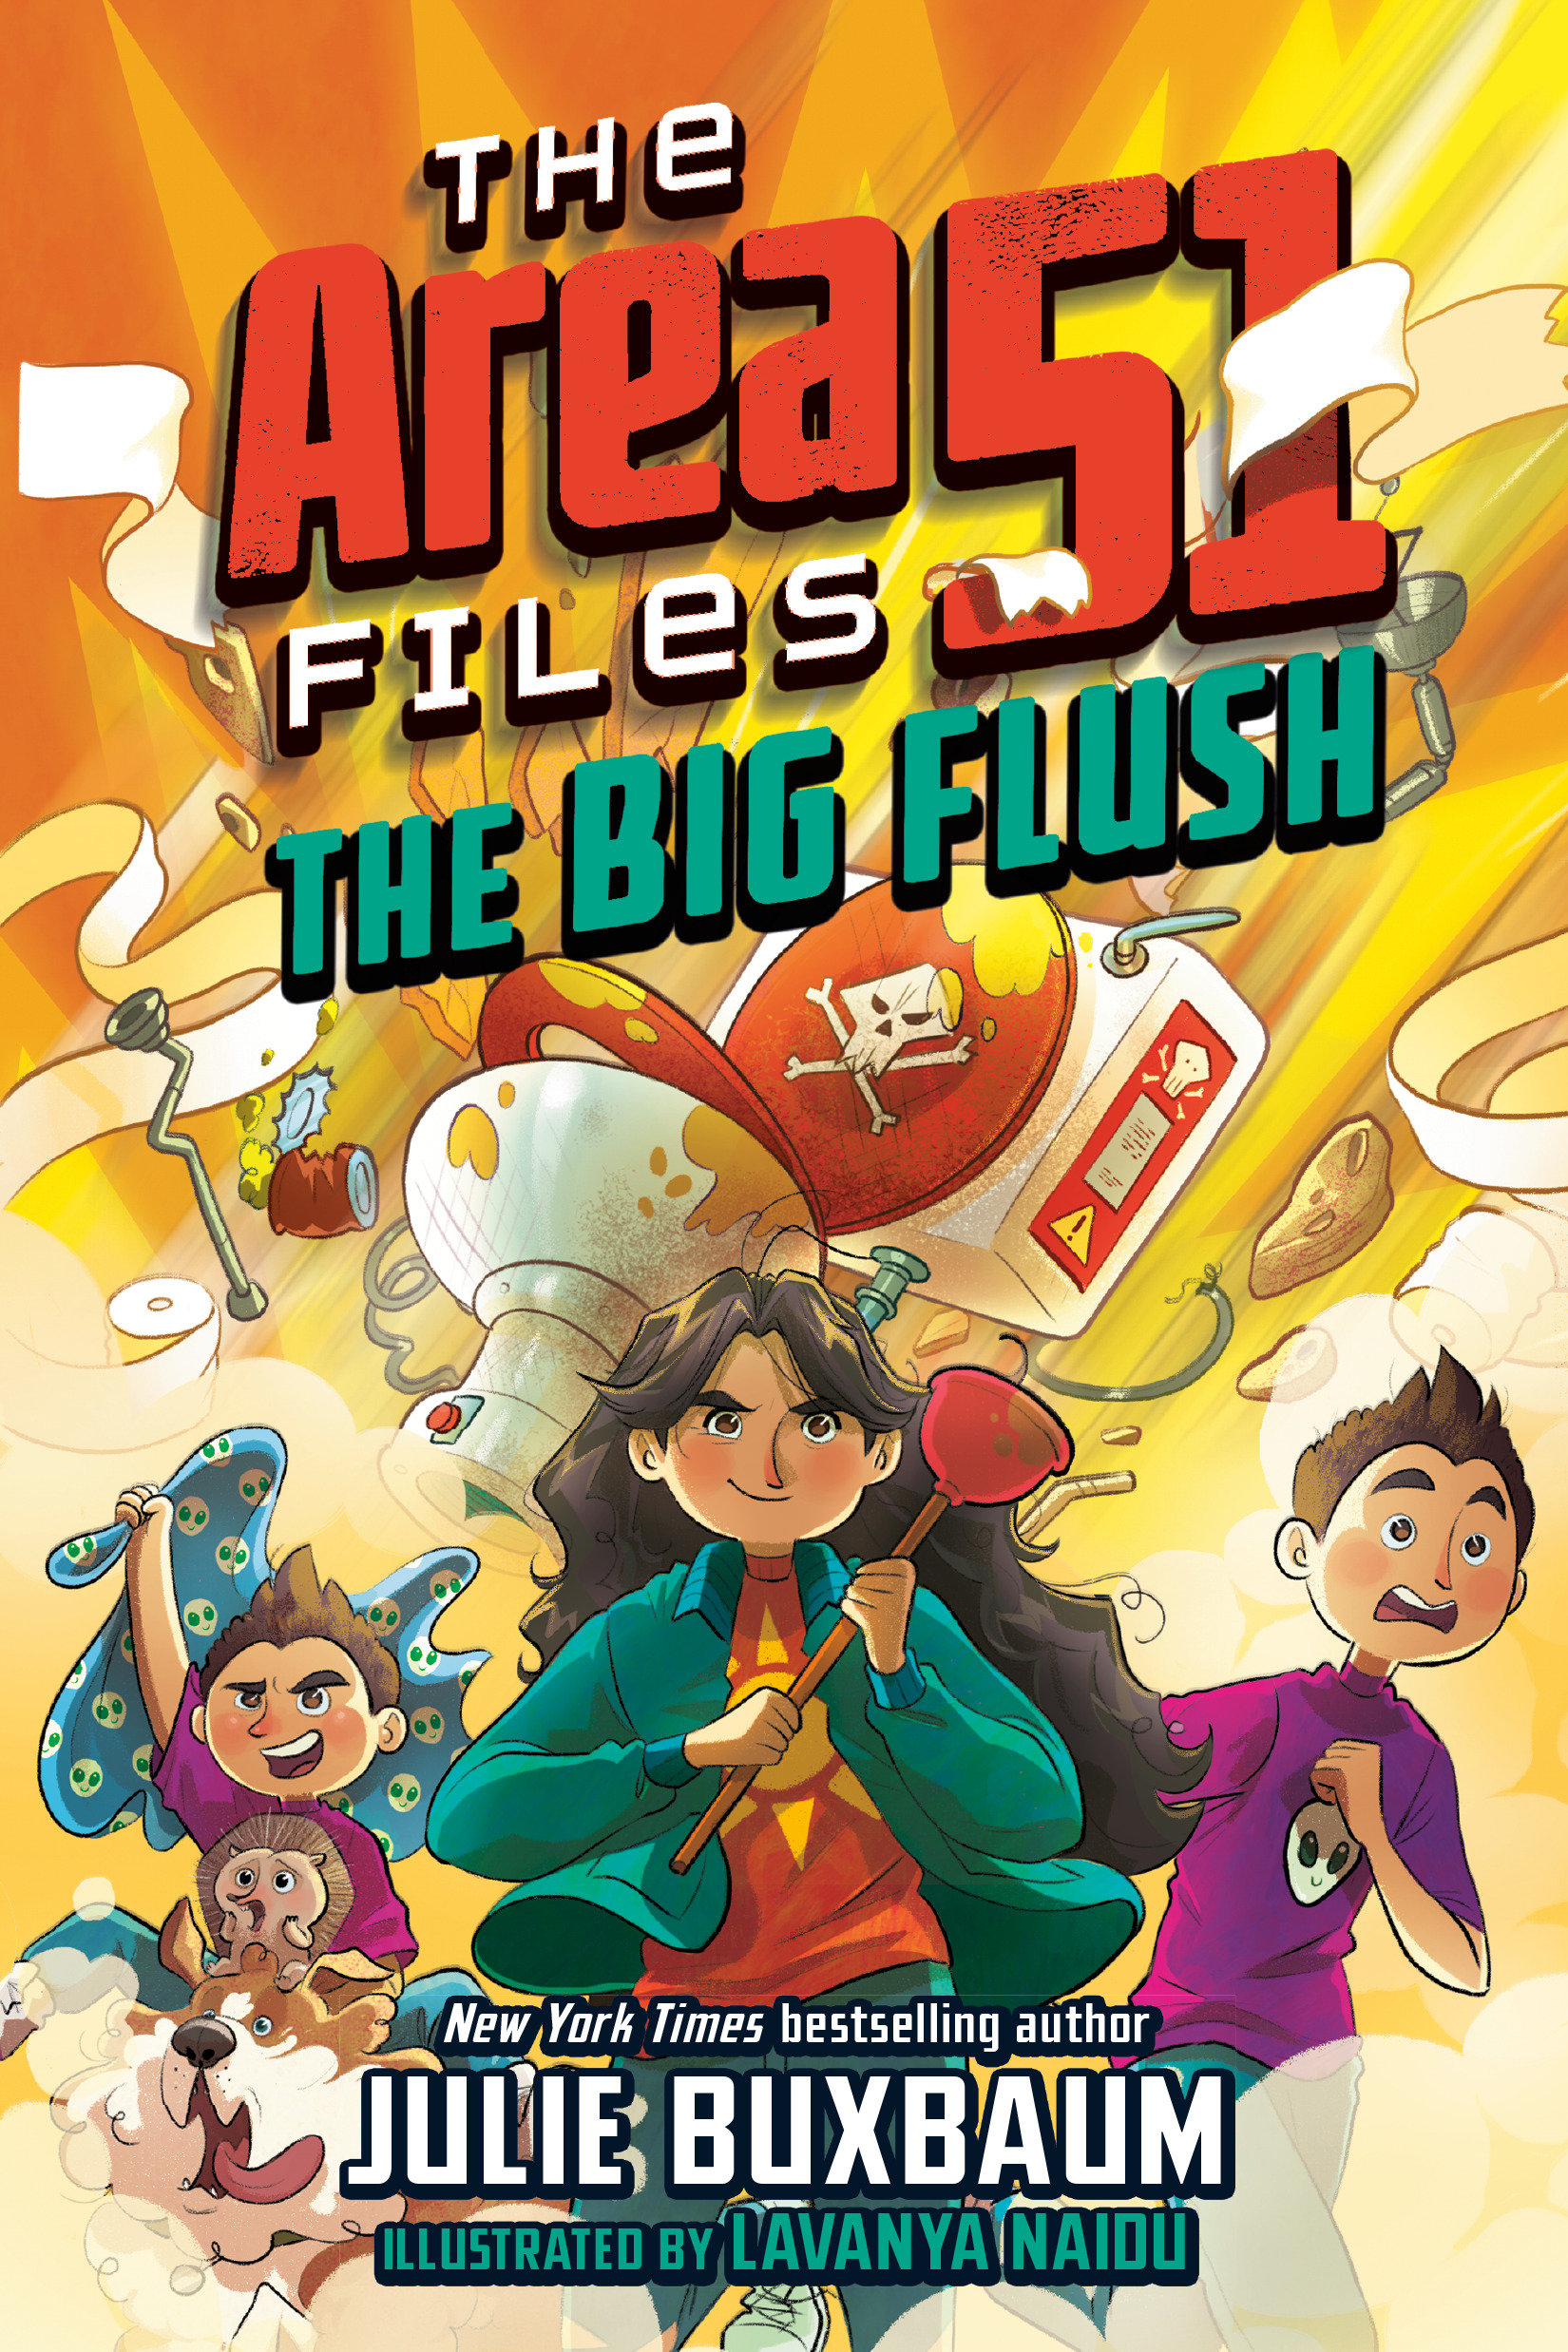 The Big Flush cover image